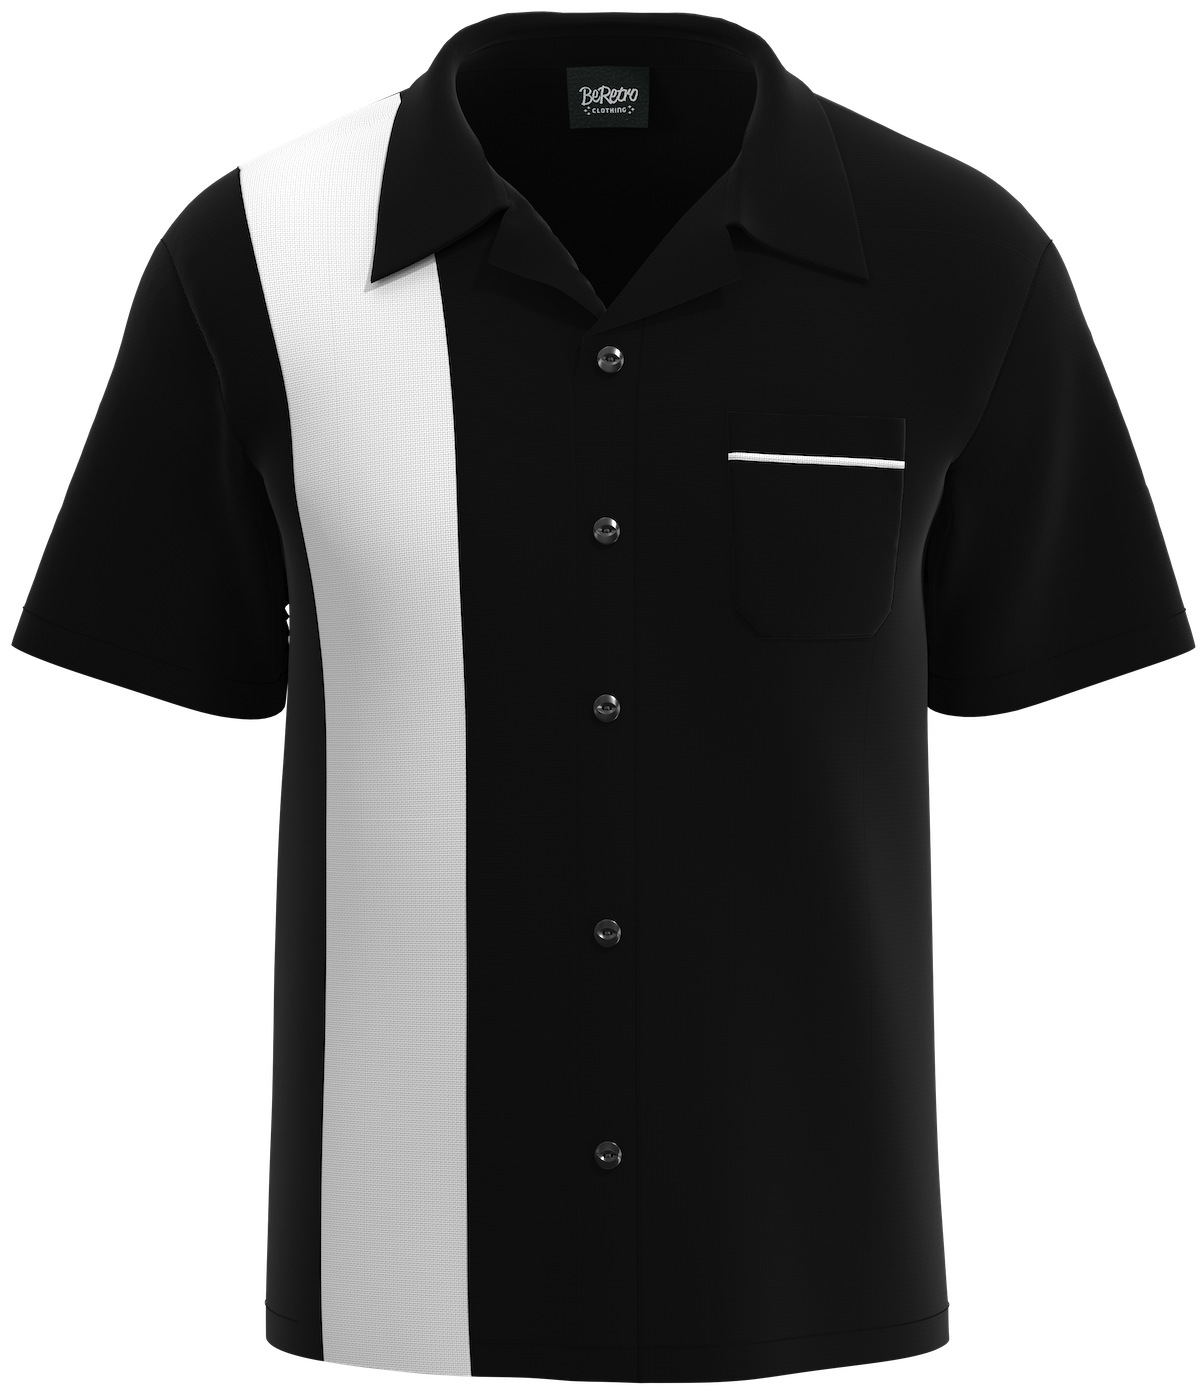 Retro Style Bowling Shirt | 50's Style Bowling Shirt